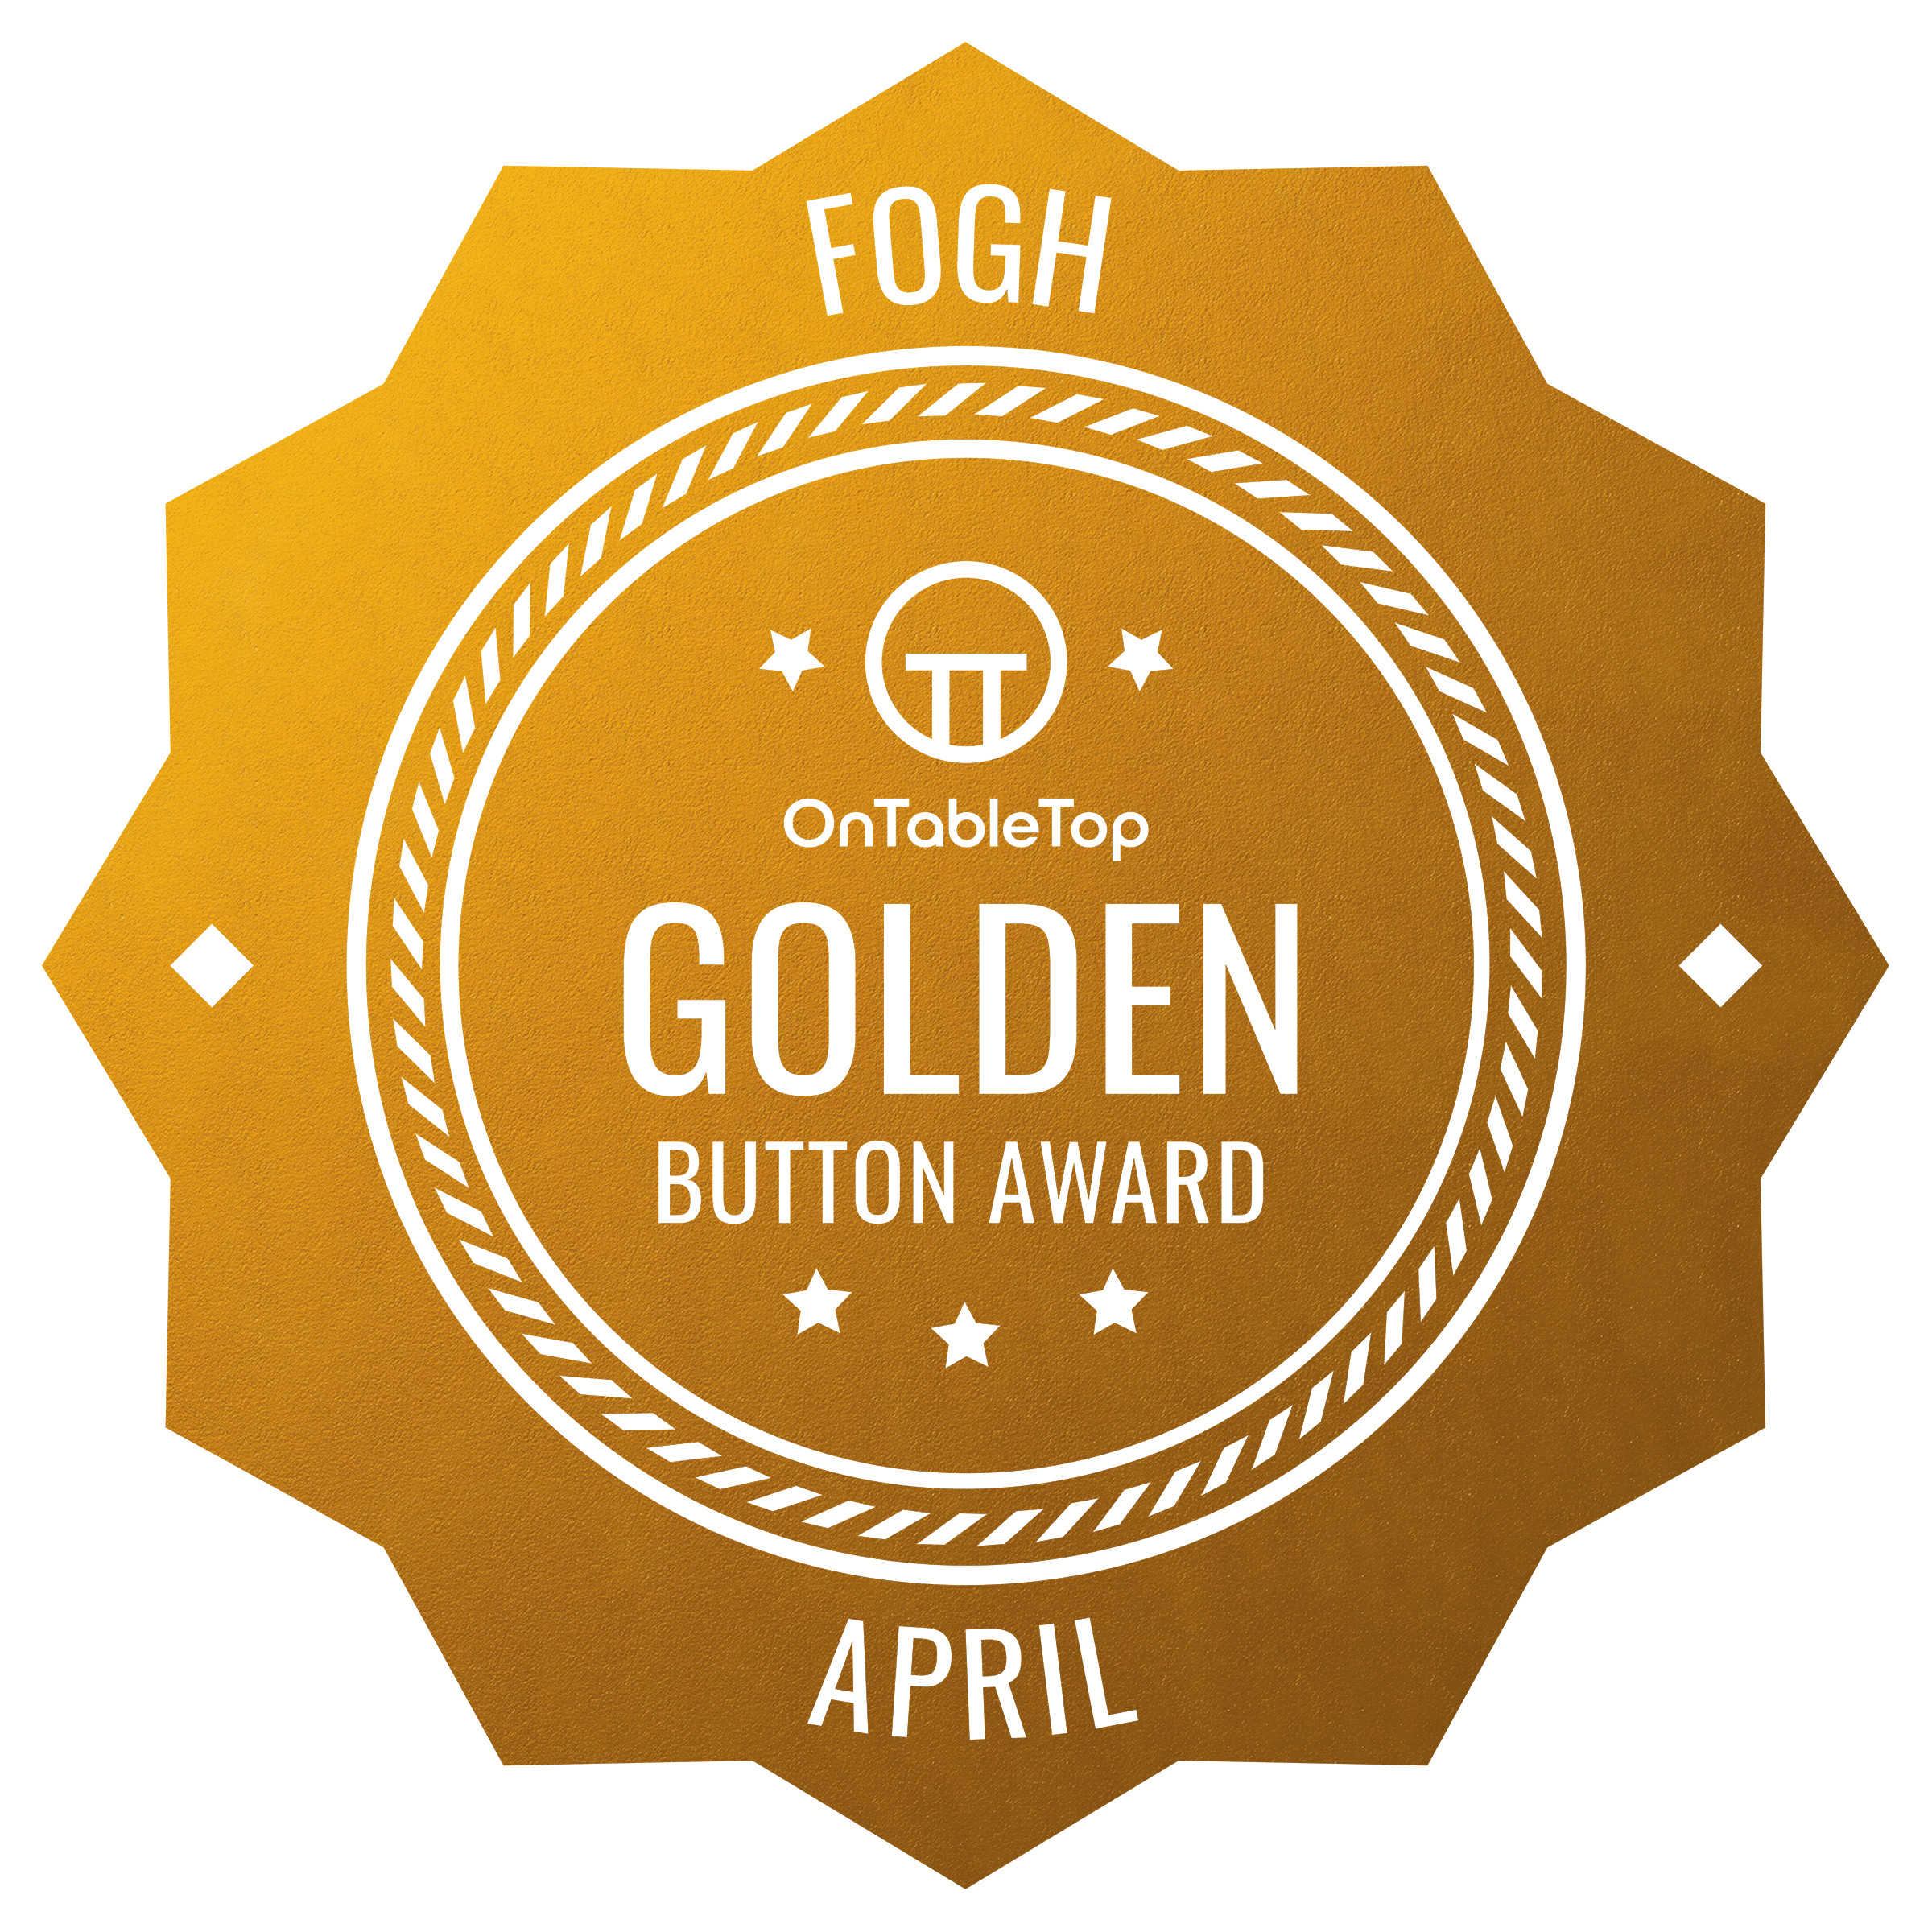 FOGH - Gold Button